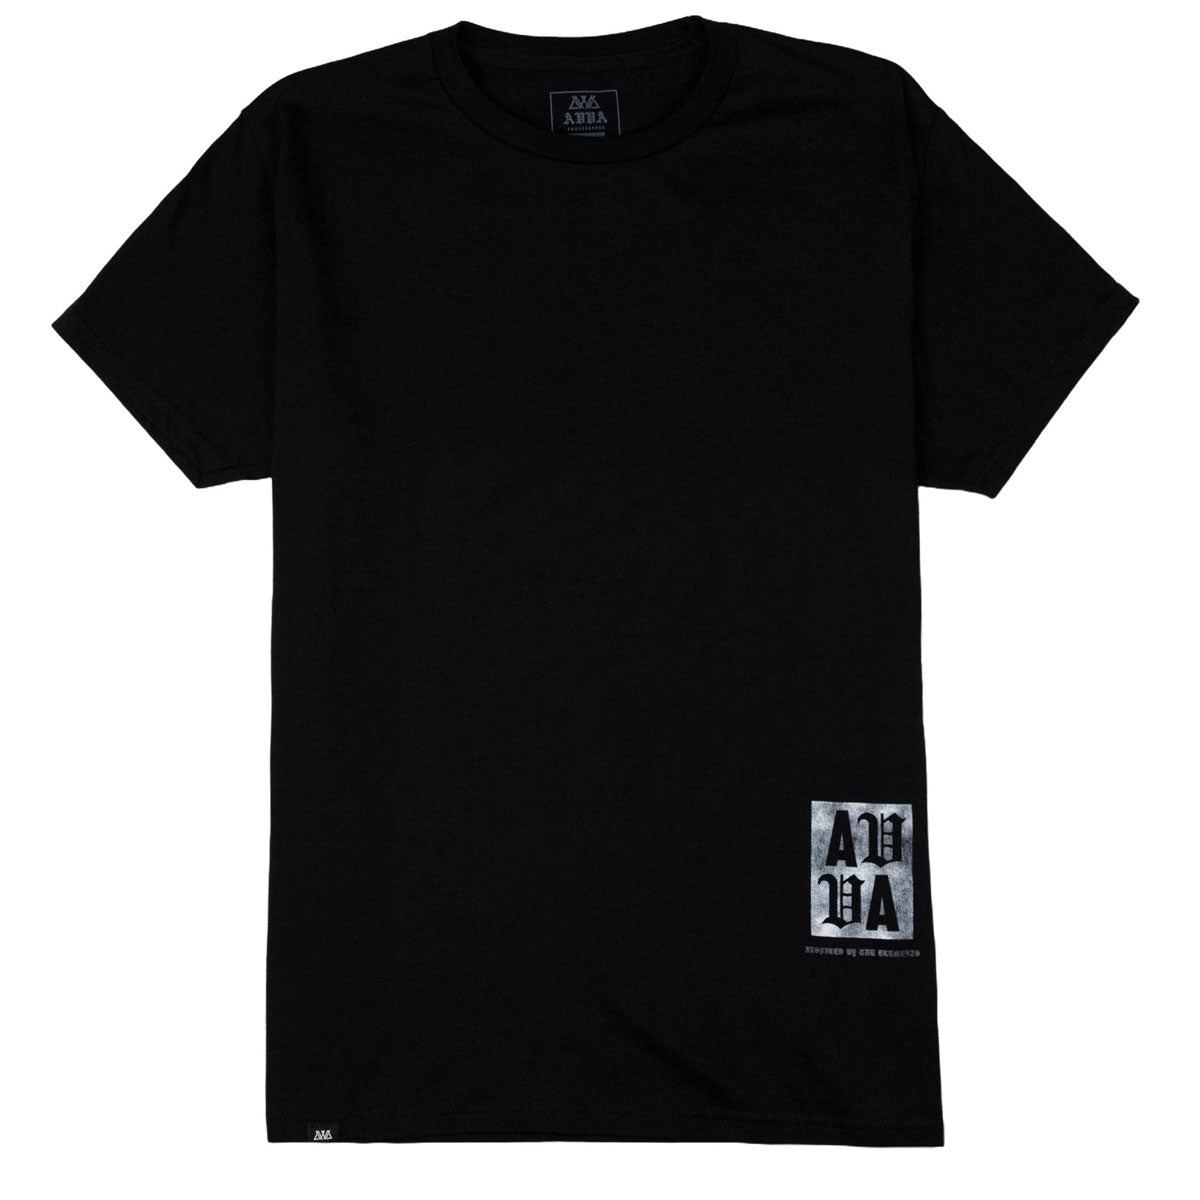 AVVA Into The Void T-Shirt - Black image 1